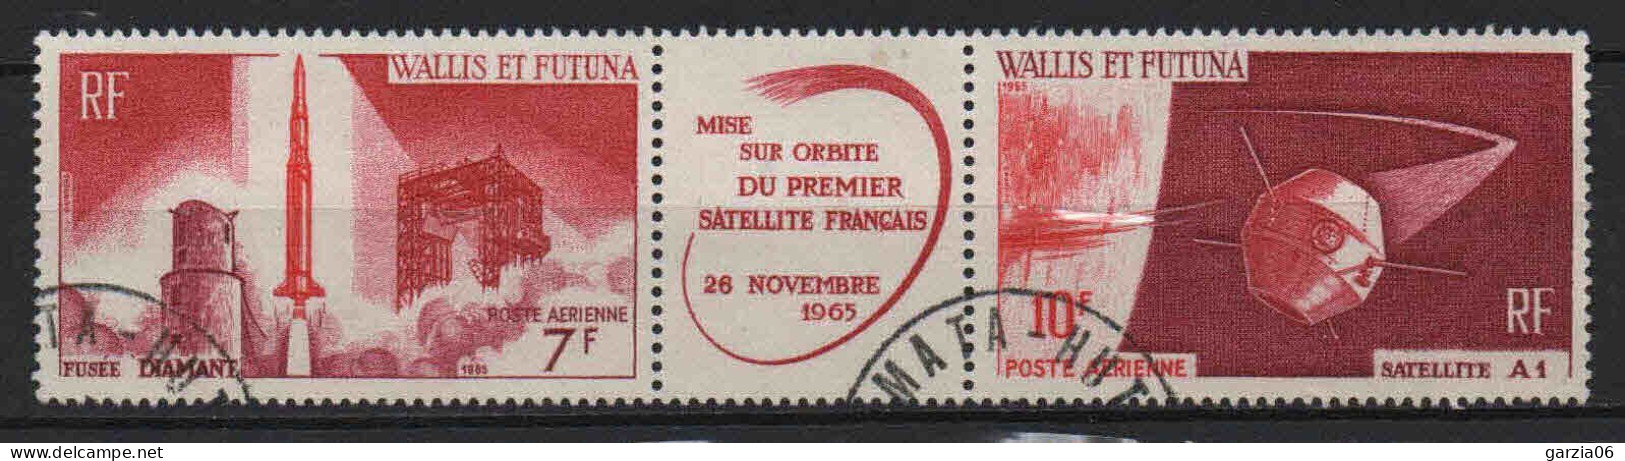 Wallis Et Futuna  - 1965  -  1ier Satellite Français  - PA 24/25A - Oblit - Used - Gebraucht